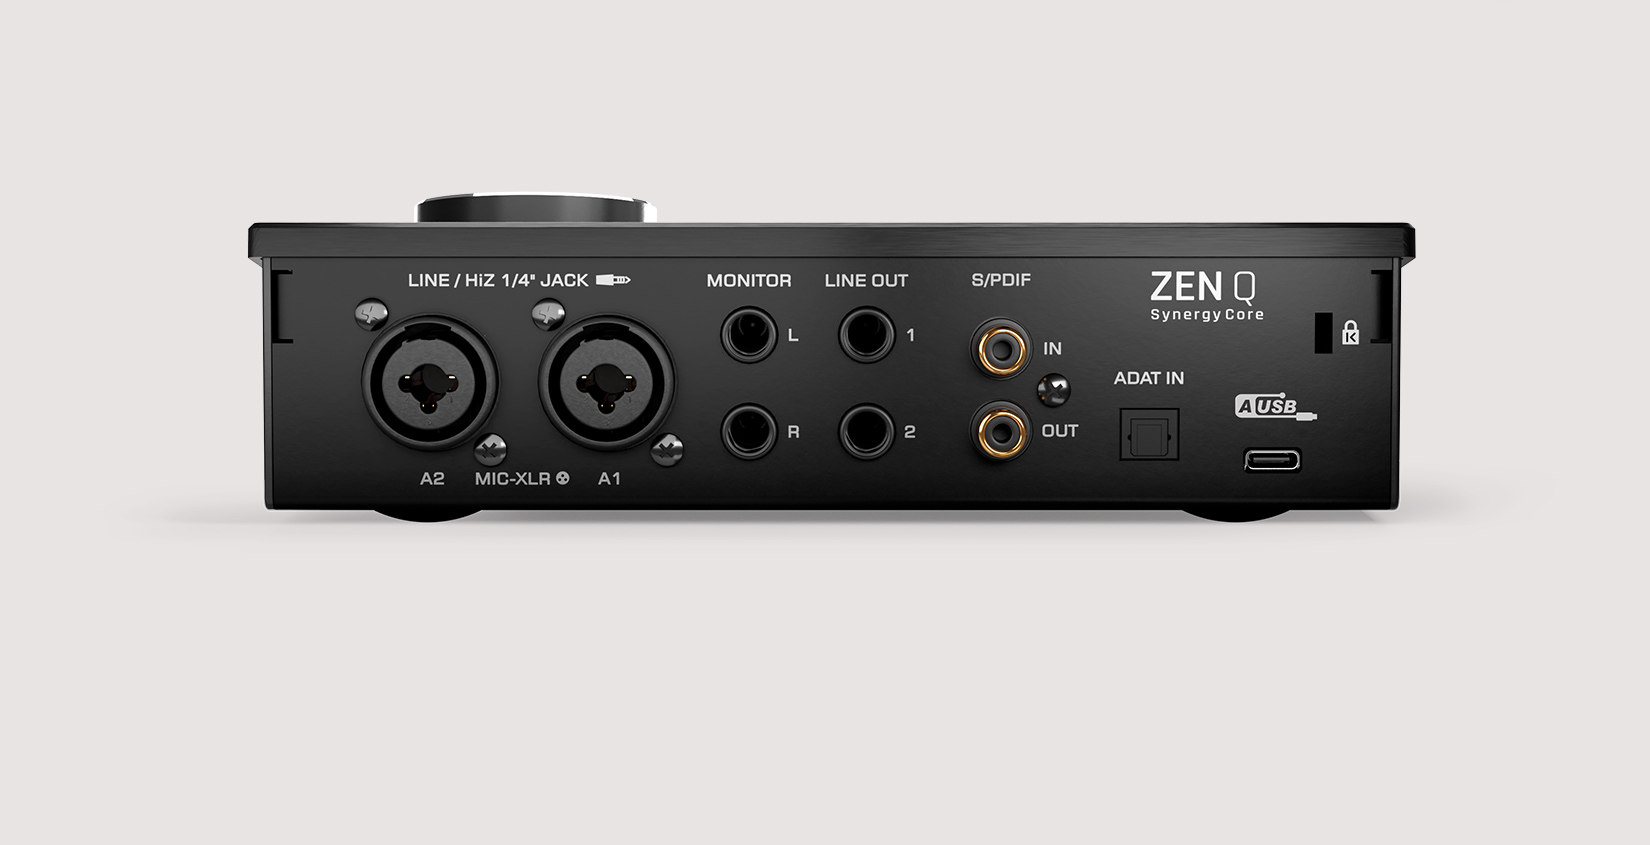 Antelope Audio Zen Q Synergy Core Звуковые карты Thunderbolt